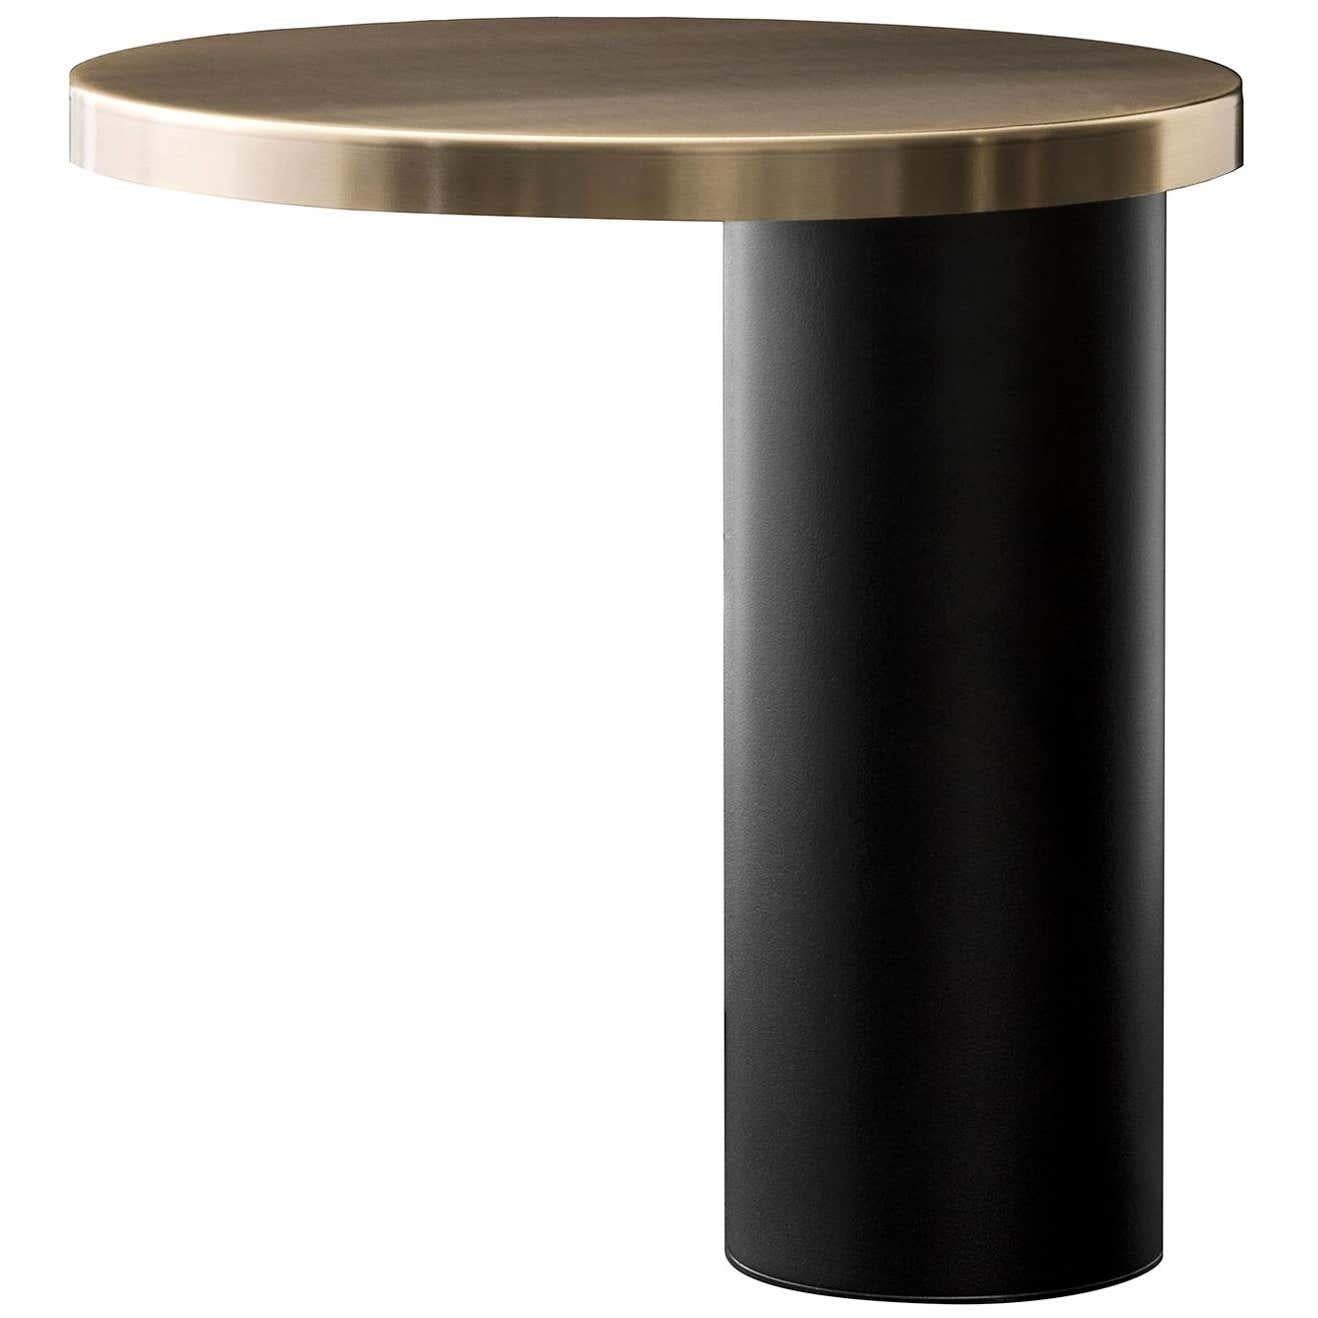 Italian Angeletti & Ruzza Table Lamp 'Cylinda' Satin Gold by Oluce For Sale